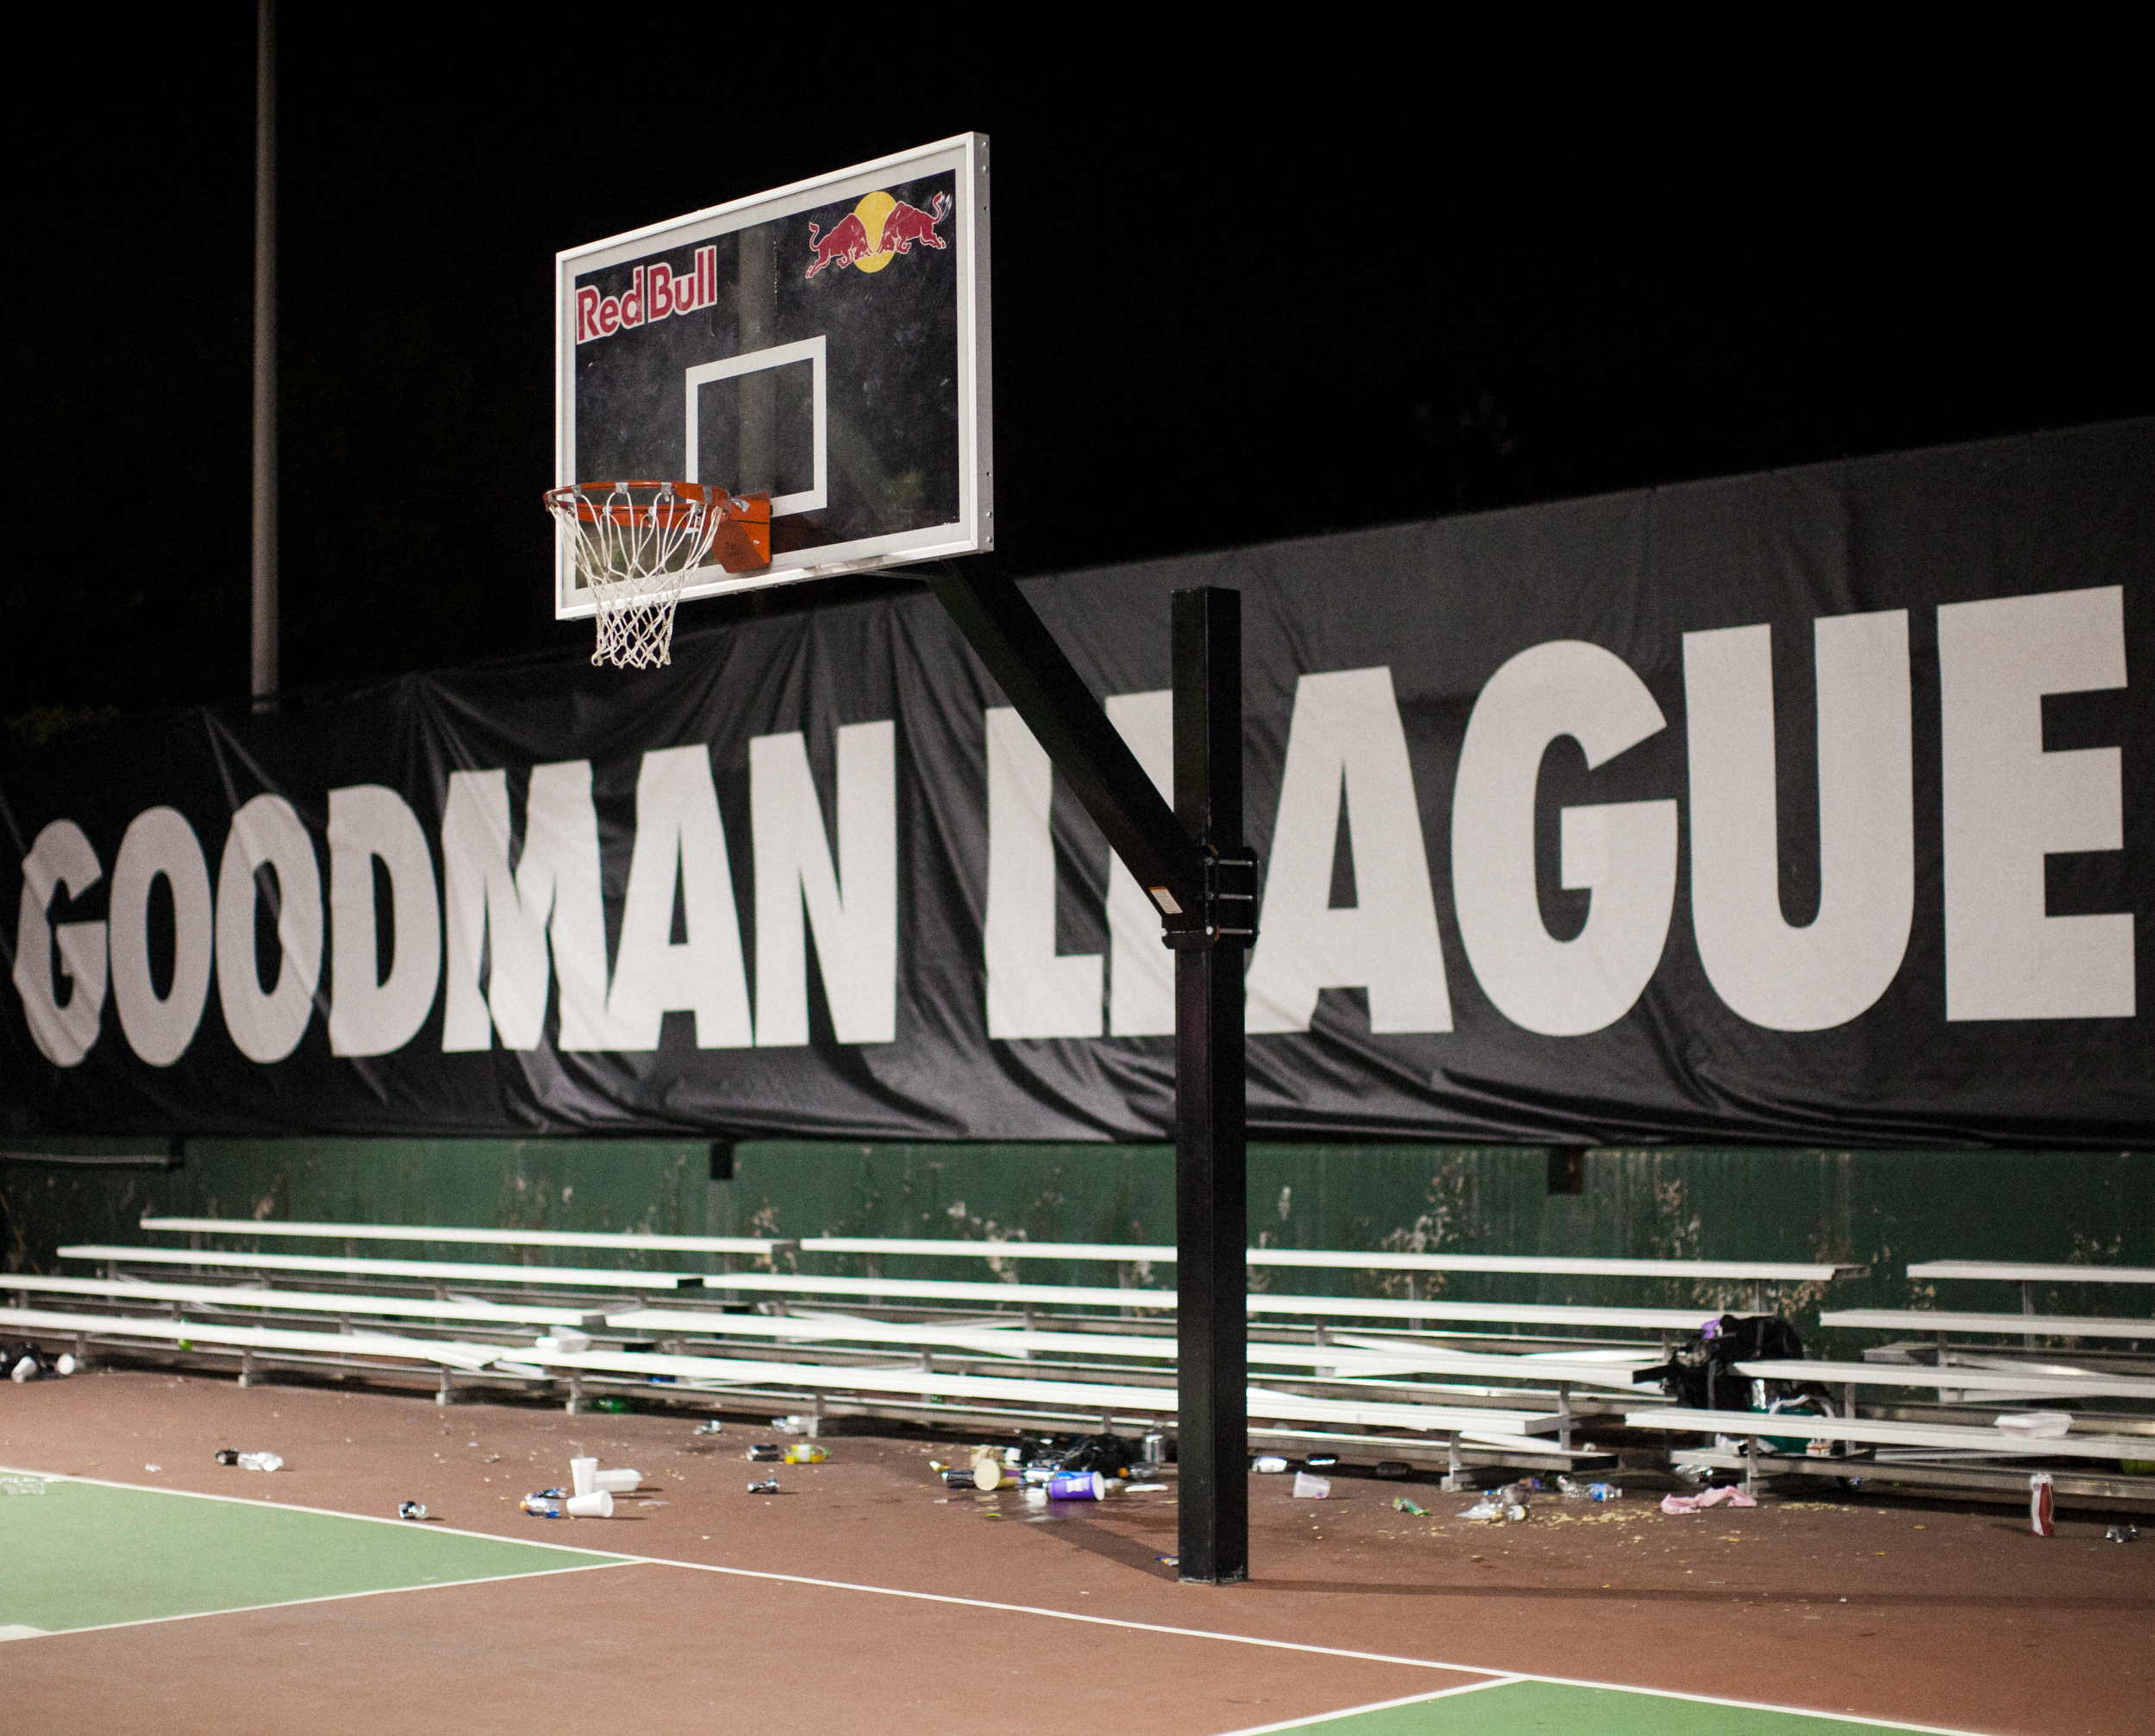 Goodman League